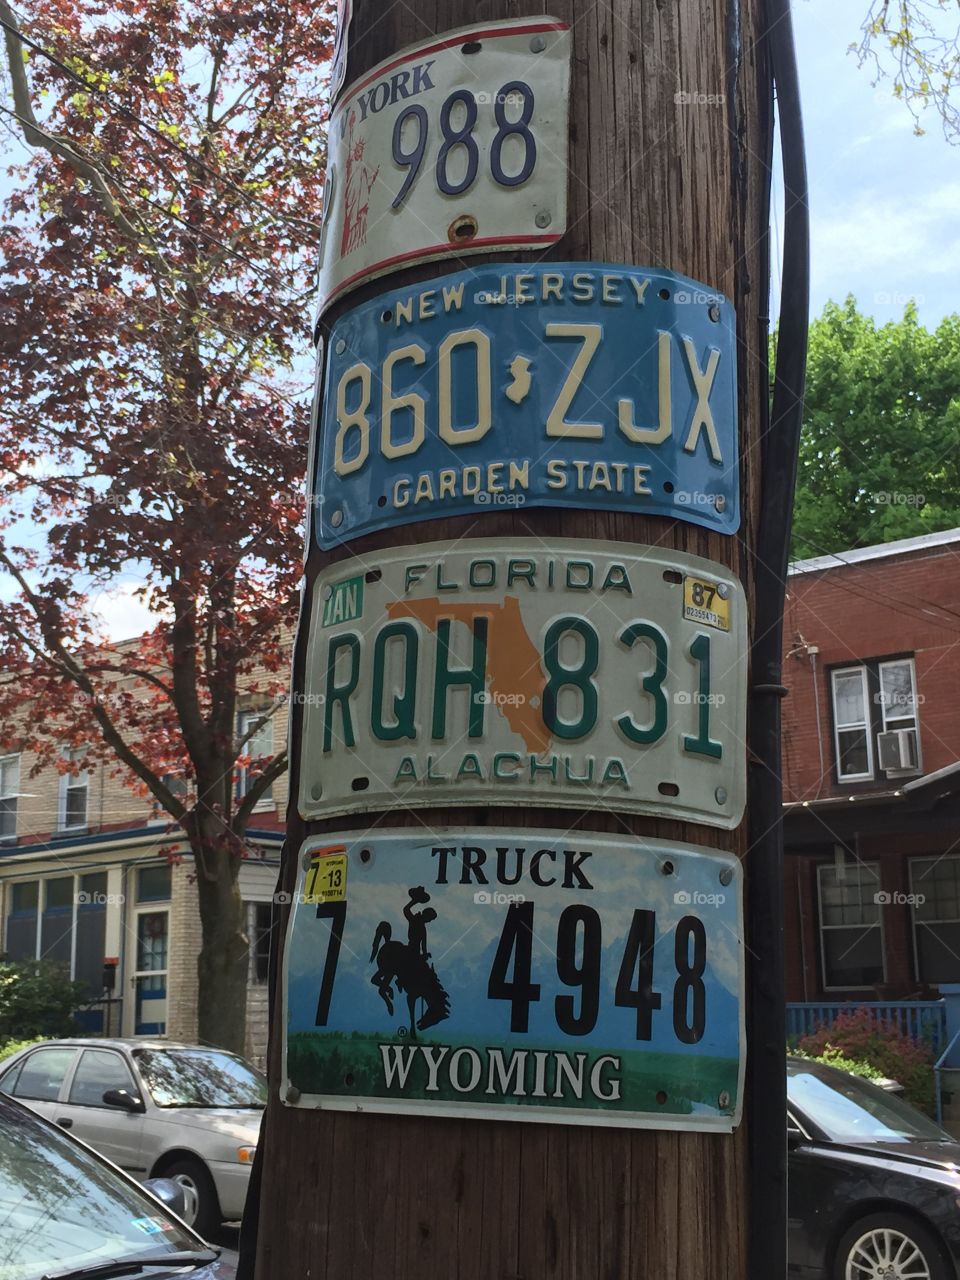 License plates on light pole 